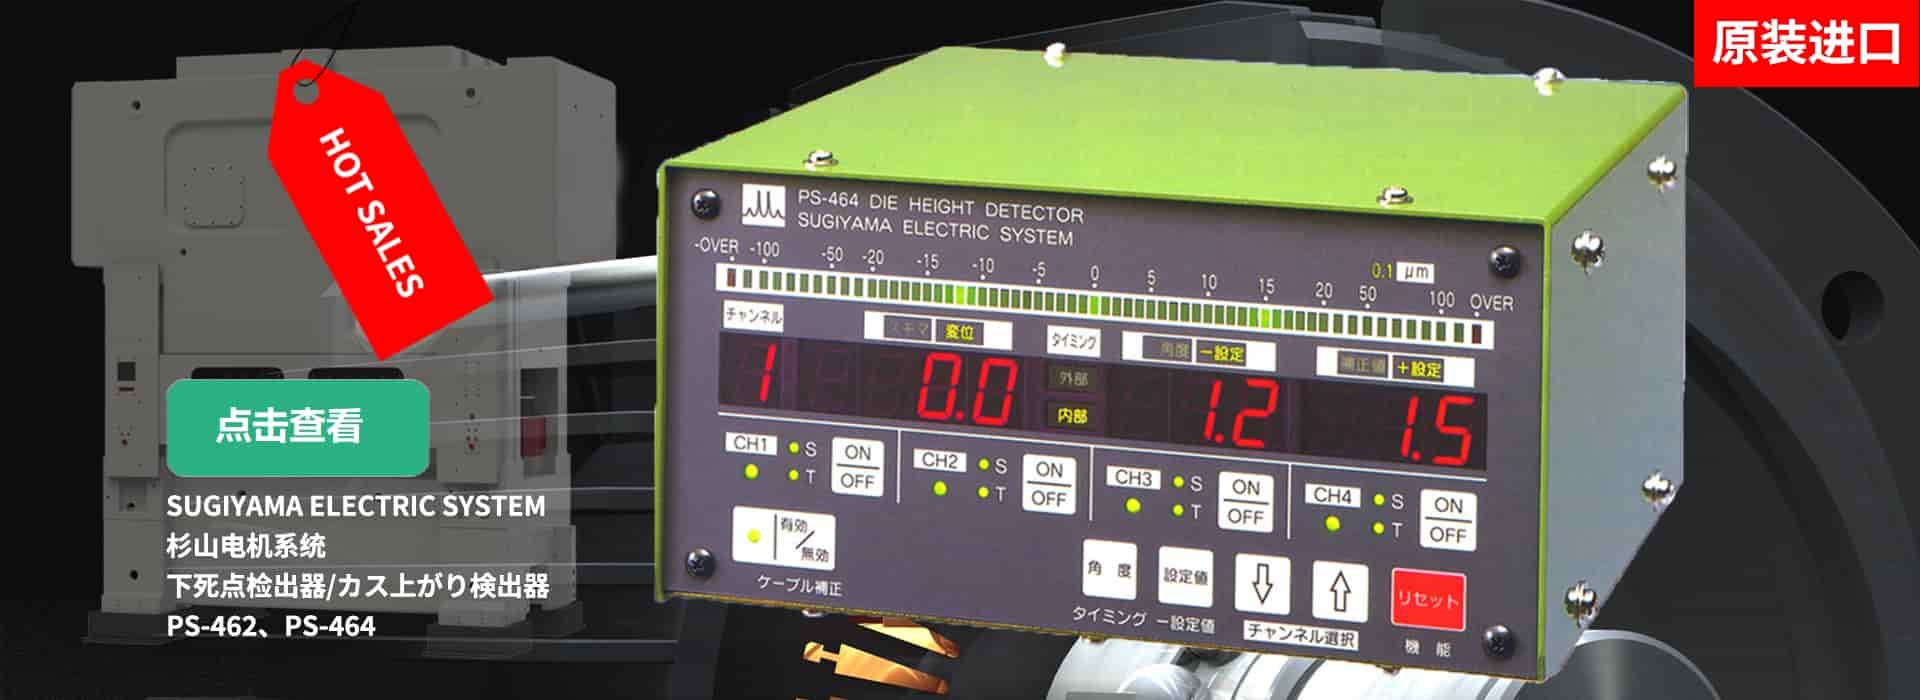 SUGIYAMA SYSTEM 杉山电机系统 下死点检测装置PS-464 -GAOSSI CHINA